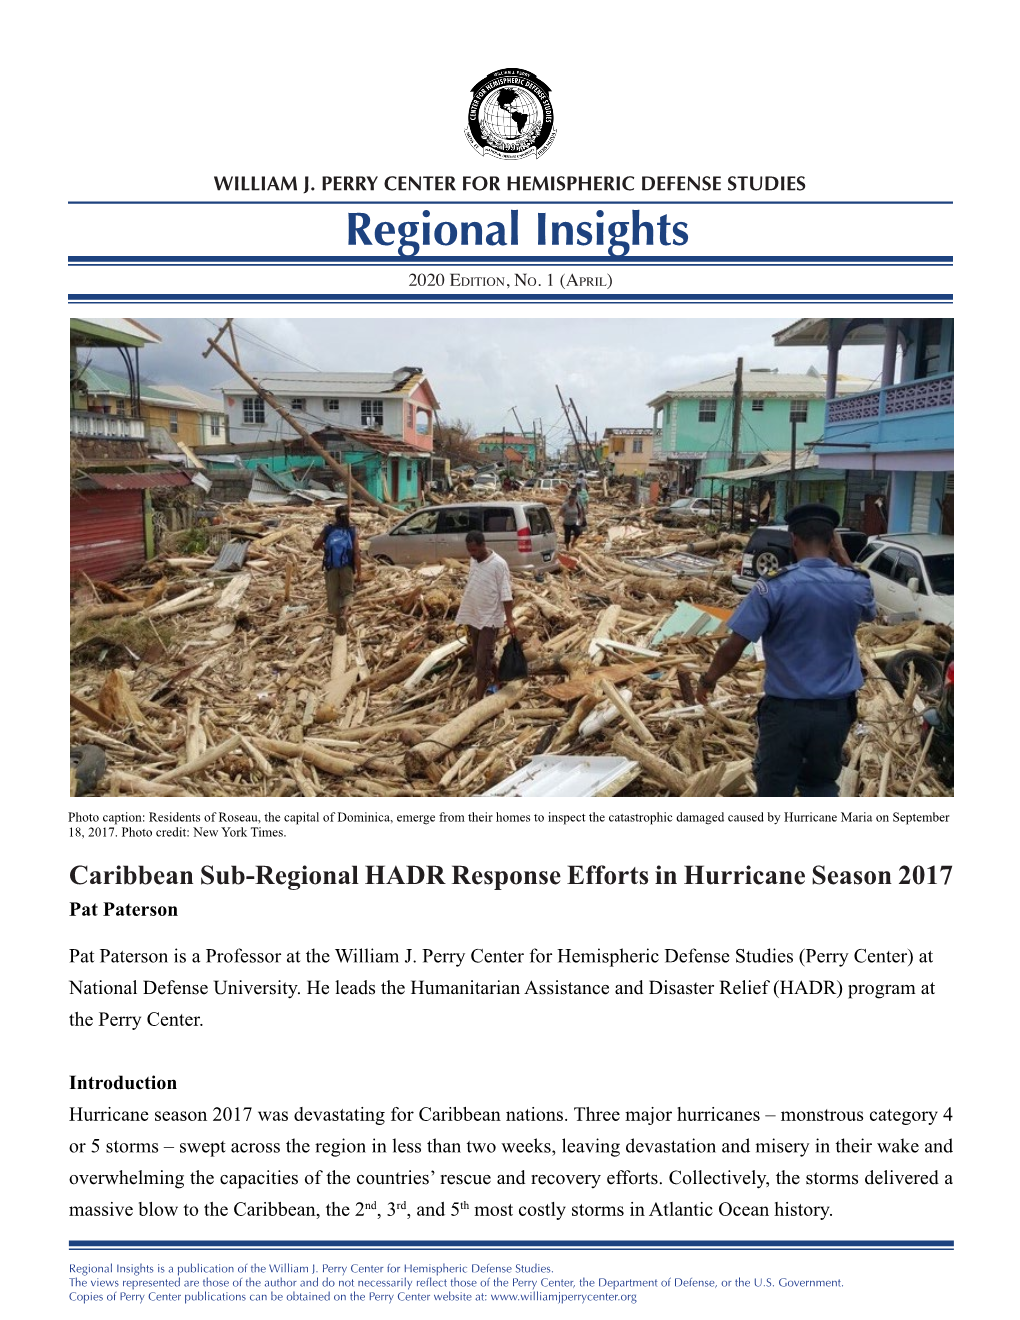 Caribbean Sub-Regional HADR Response Efforts in Hurricane Season 2017 Pat Paterson